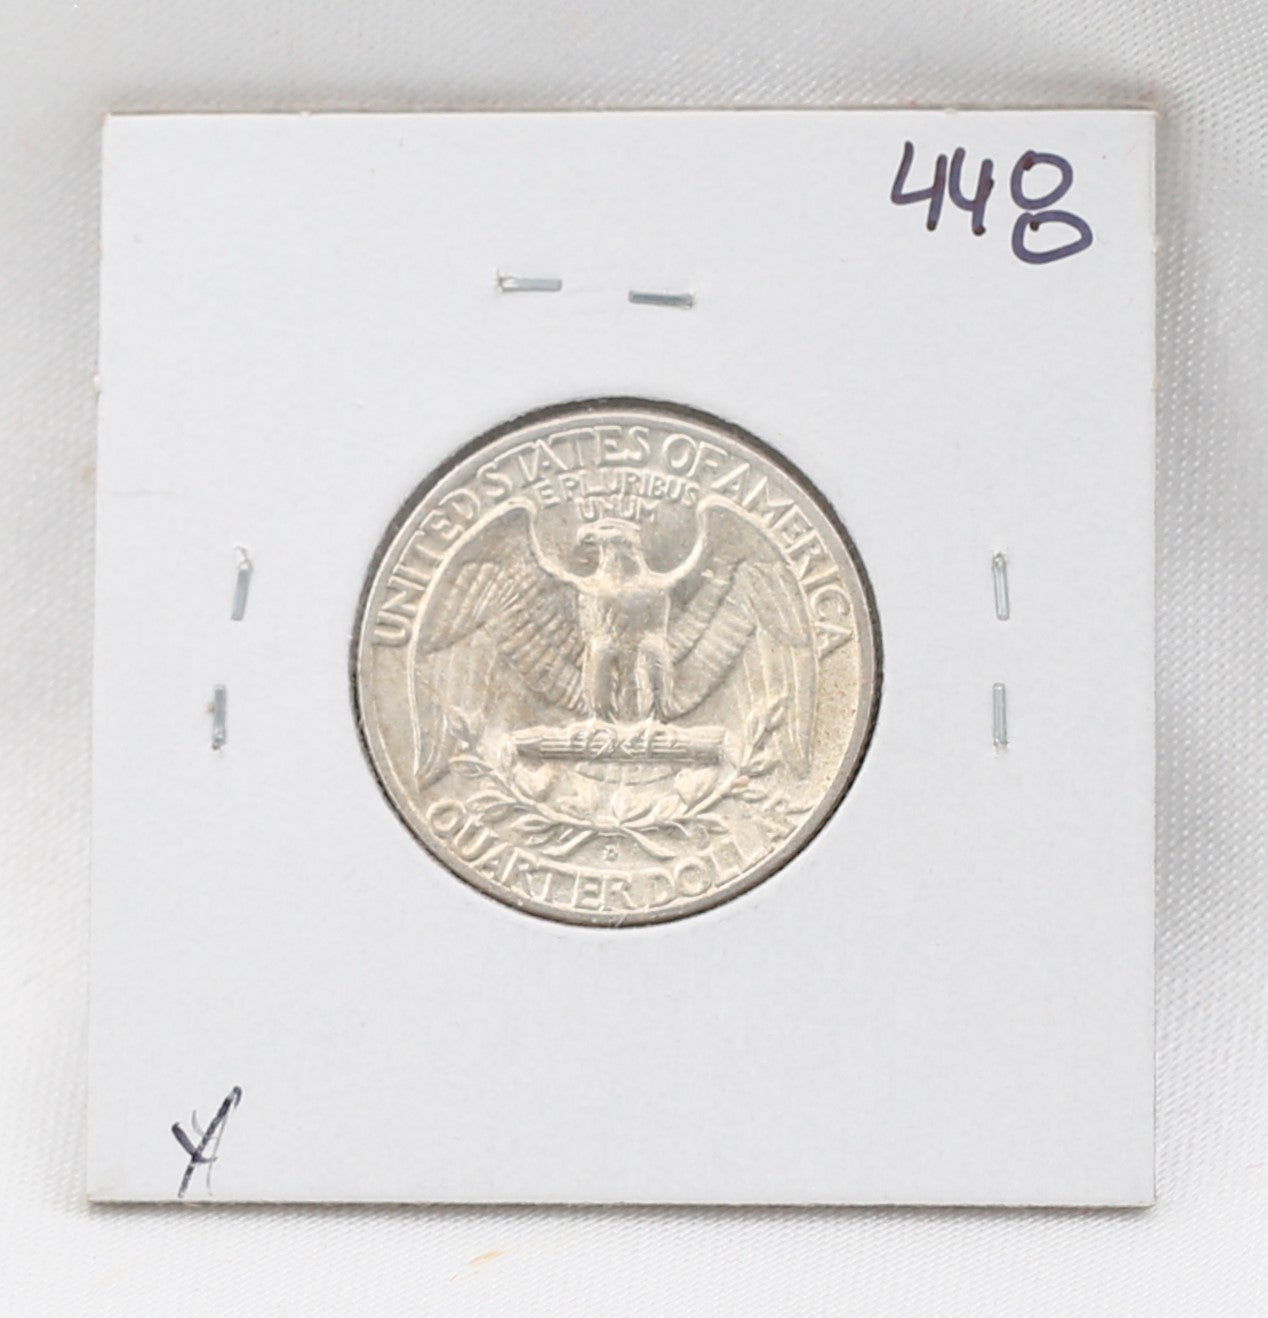 1952 D Silver Quarter